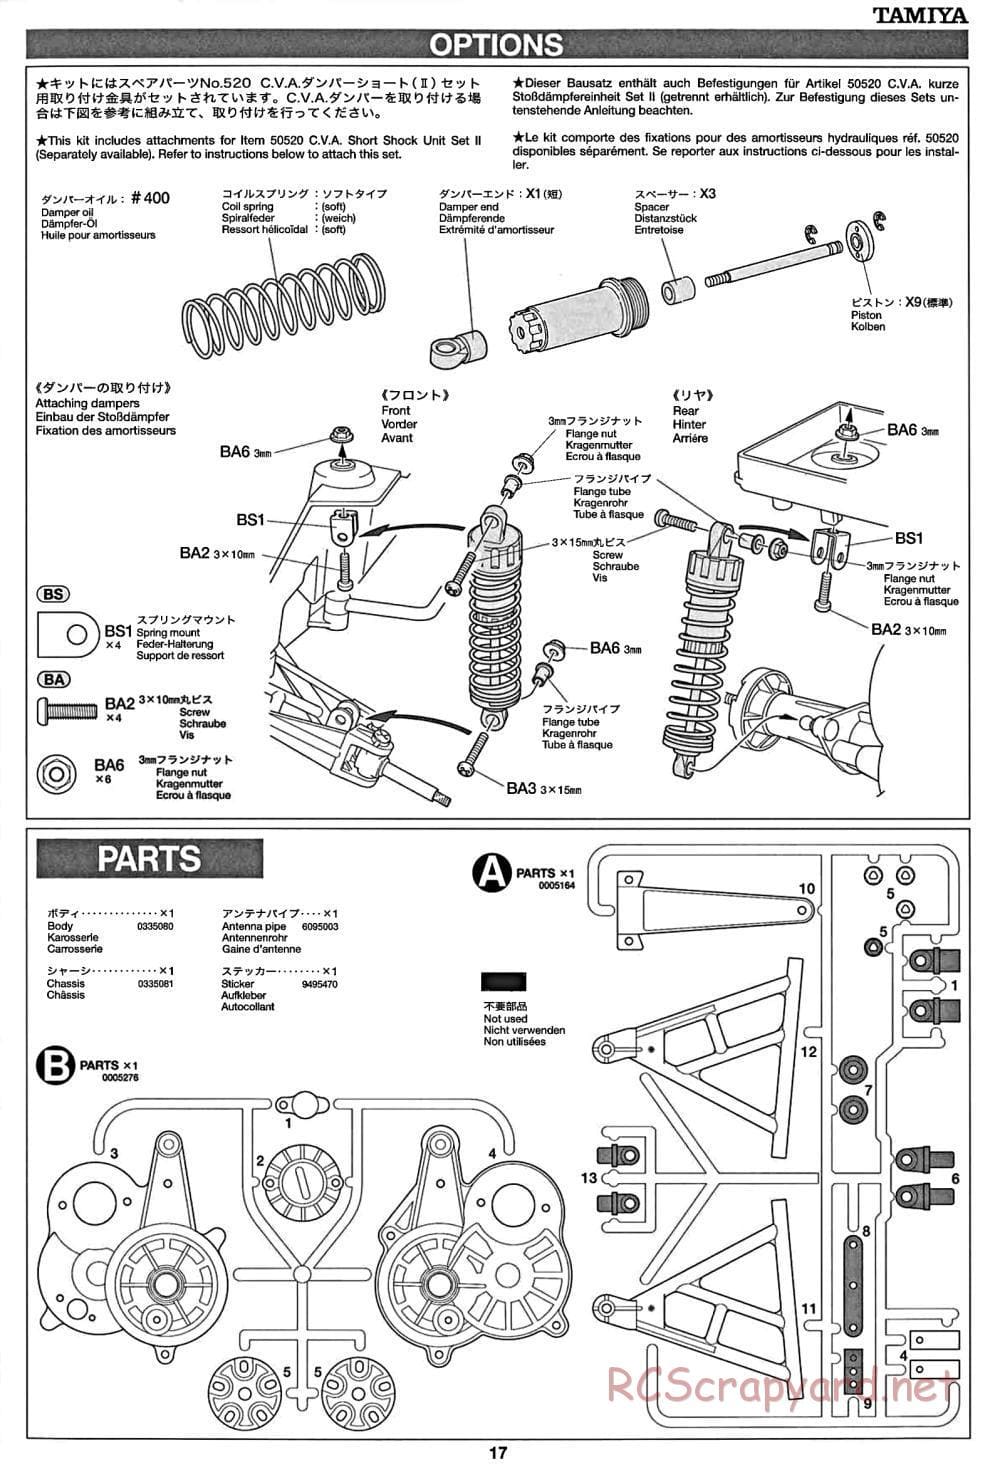 Tamiya - CW-01 Chassis - Manual - Page 17